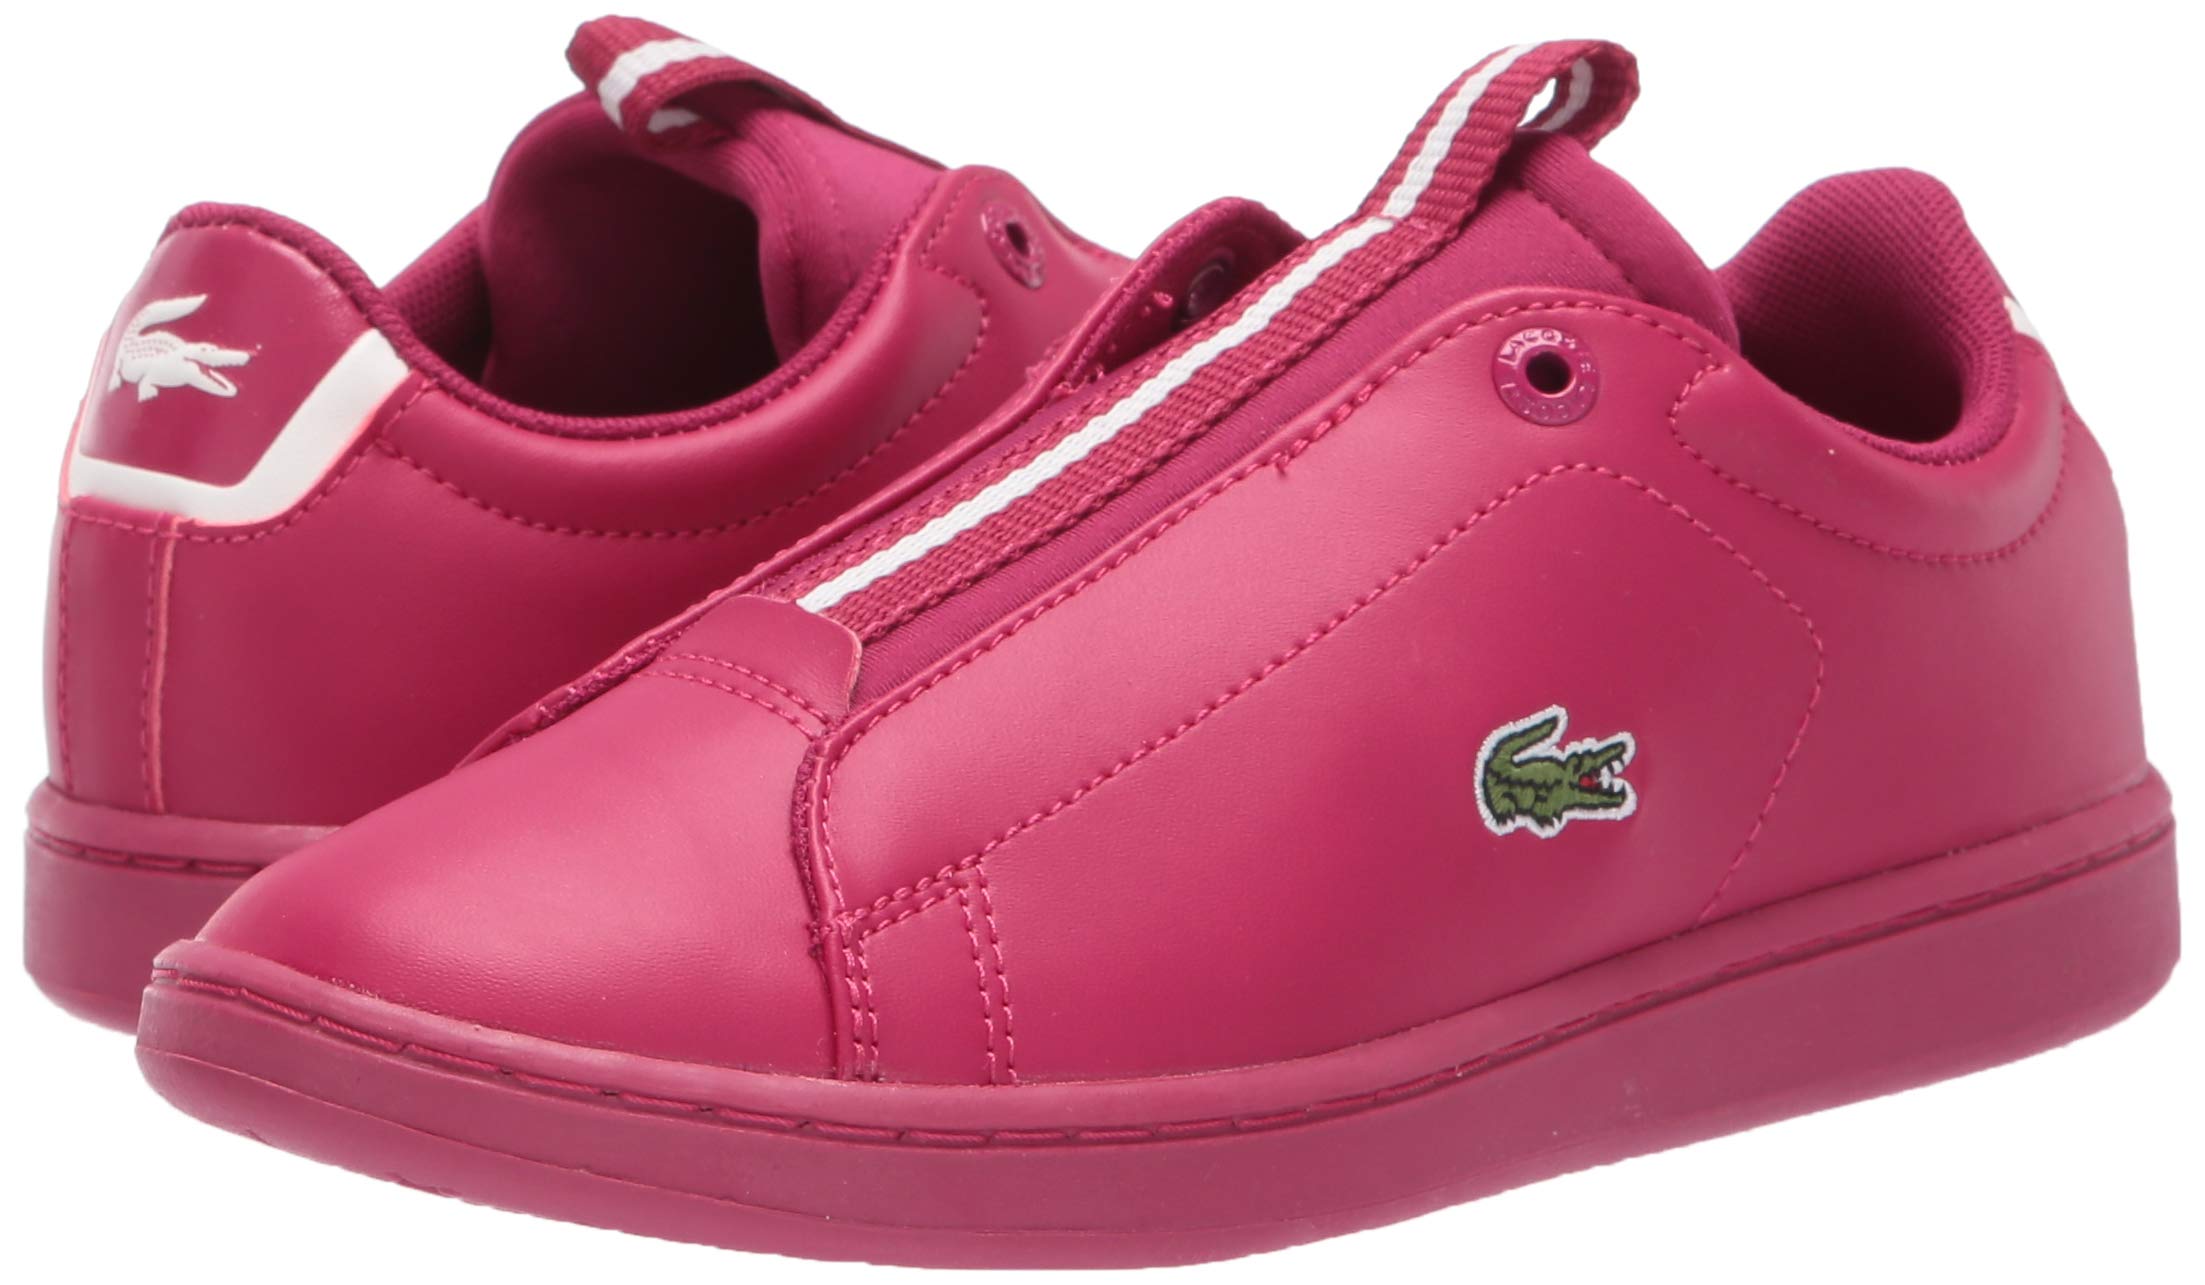 Lacoste Unisex-Child Kid's Carnaby Sneaker